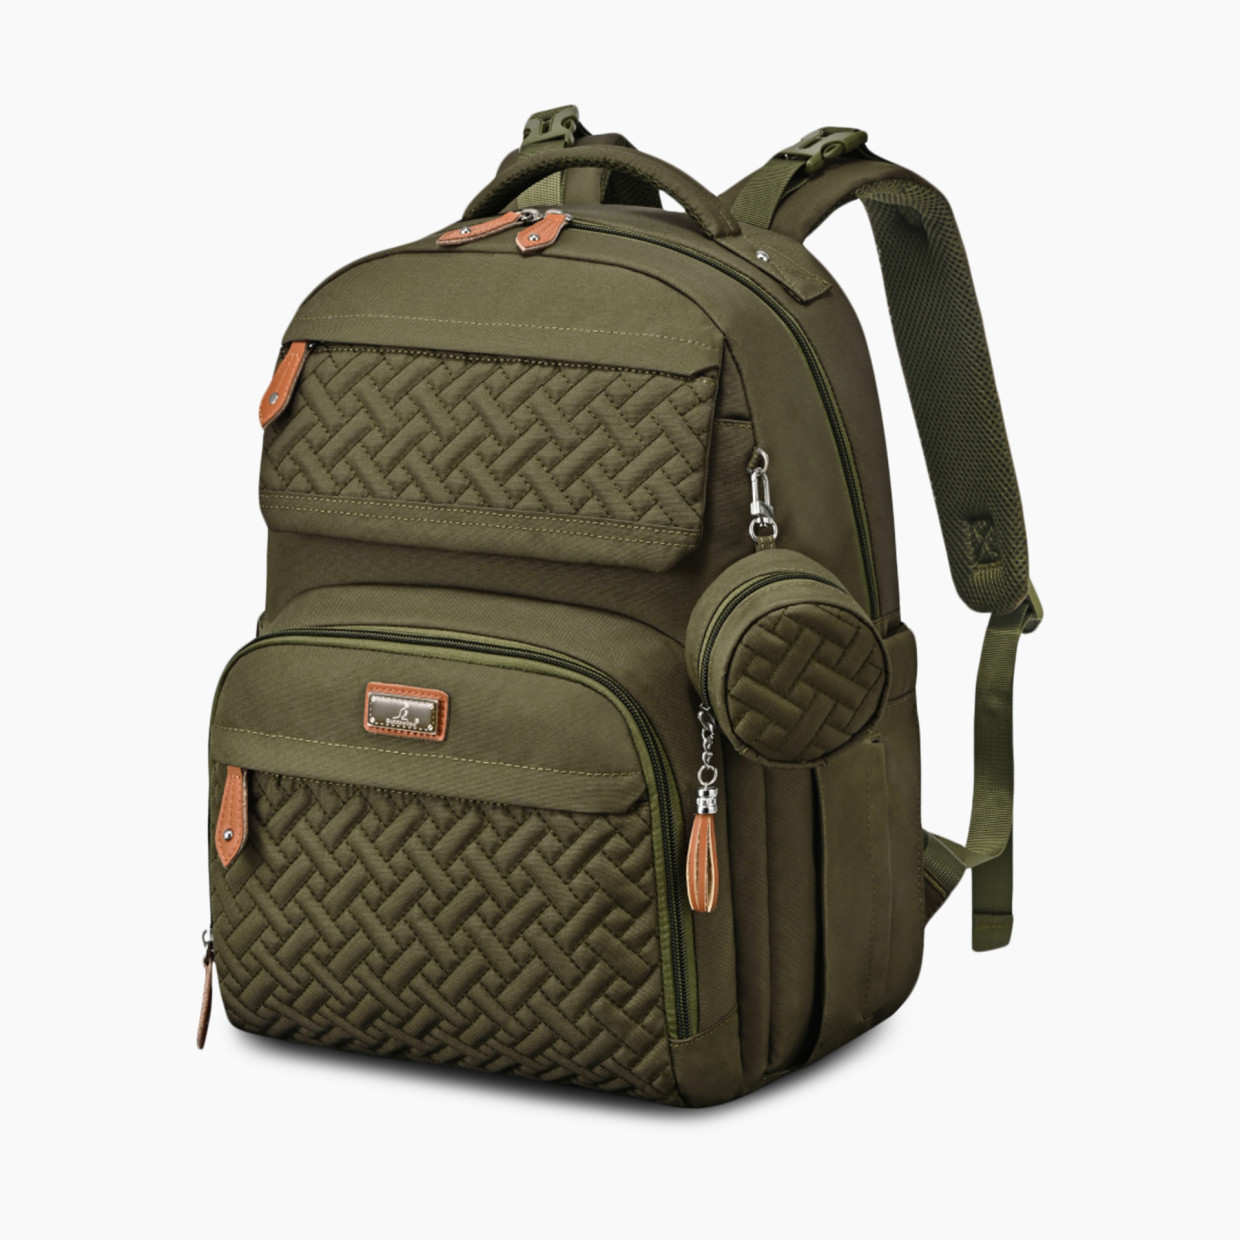 Babbleroo Travel Diaper Bag Backpack - Army Green.